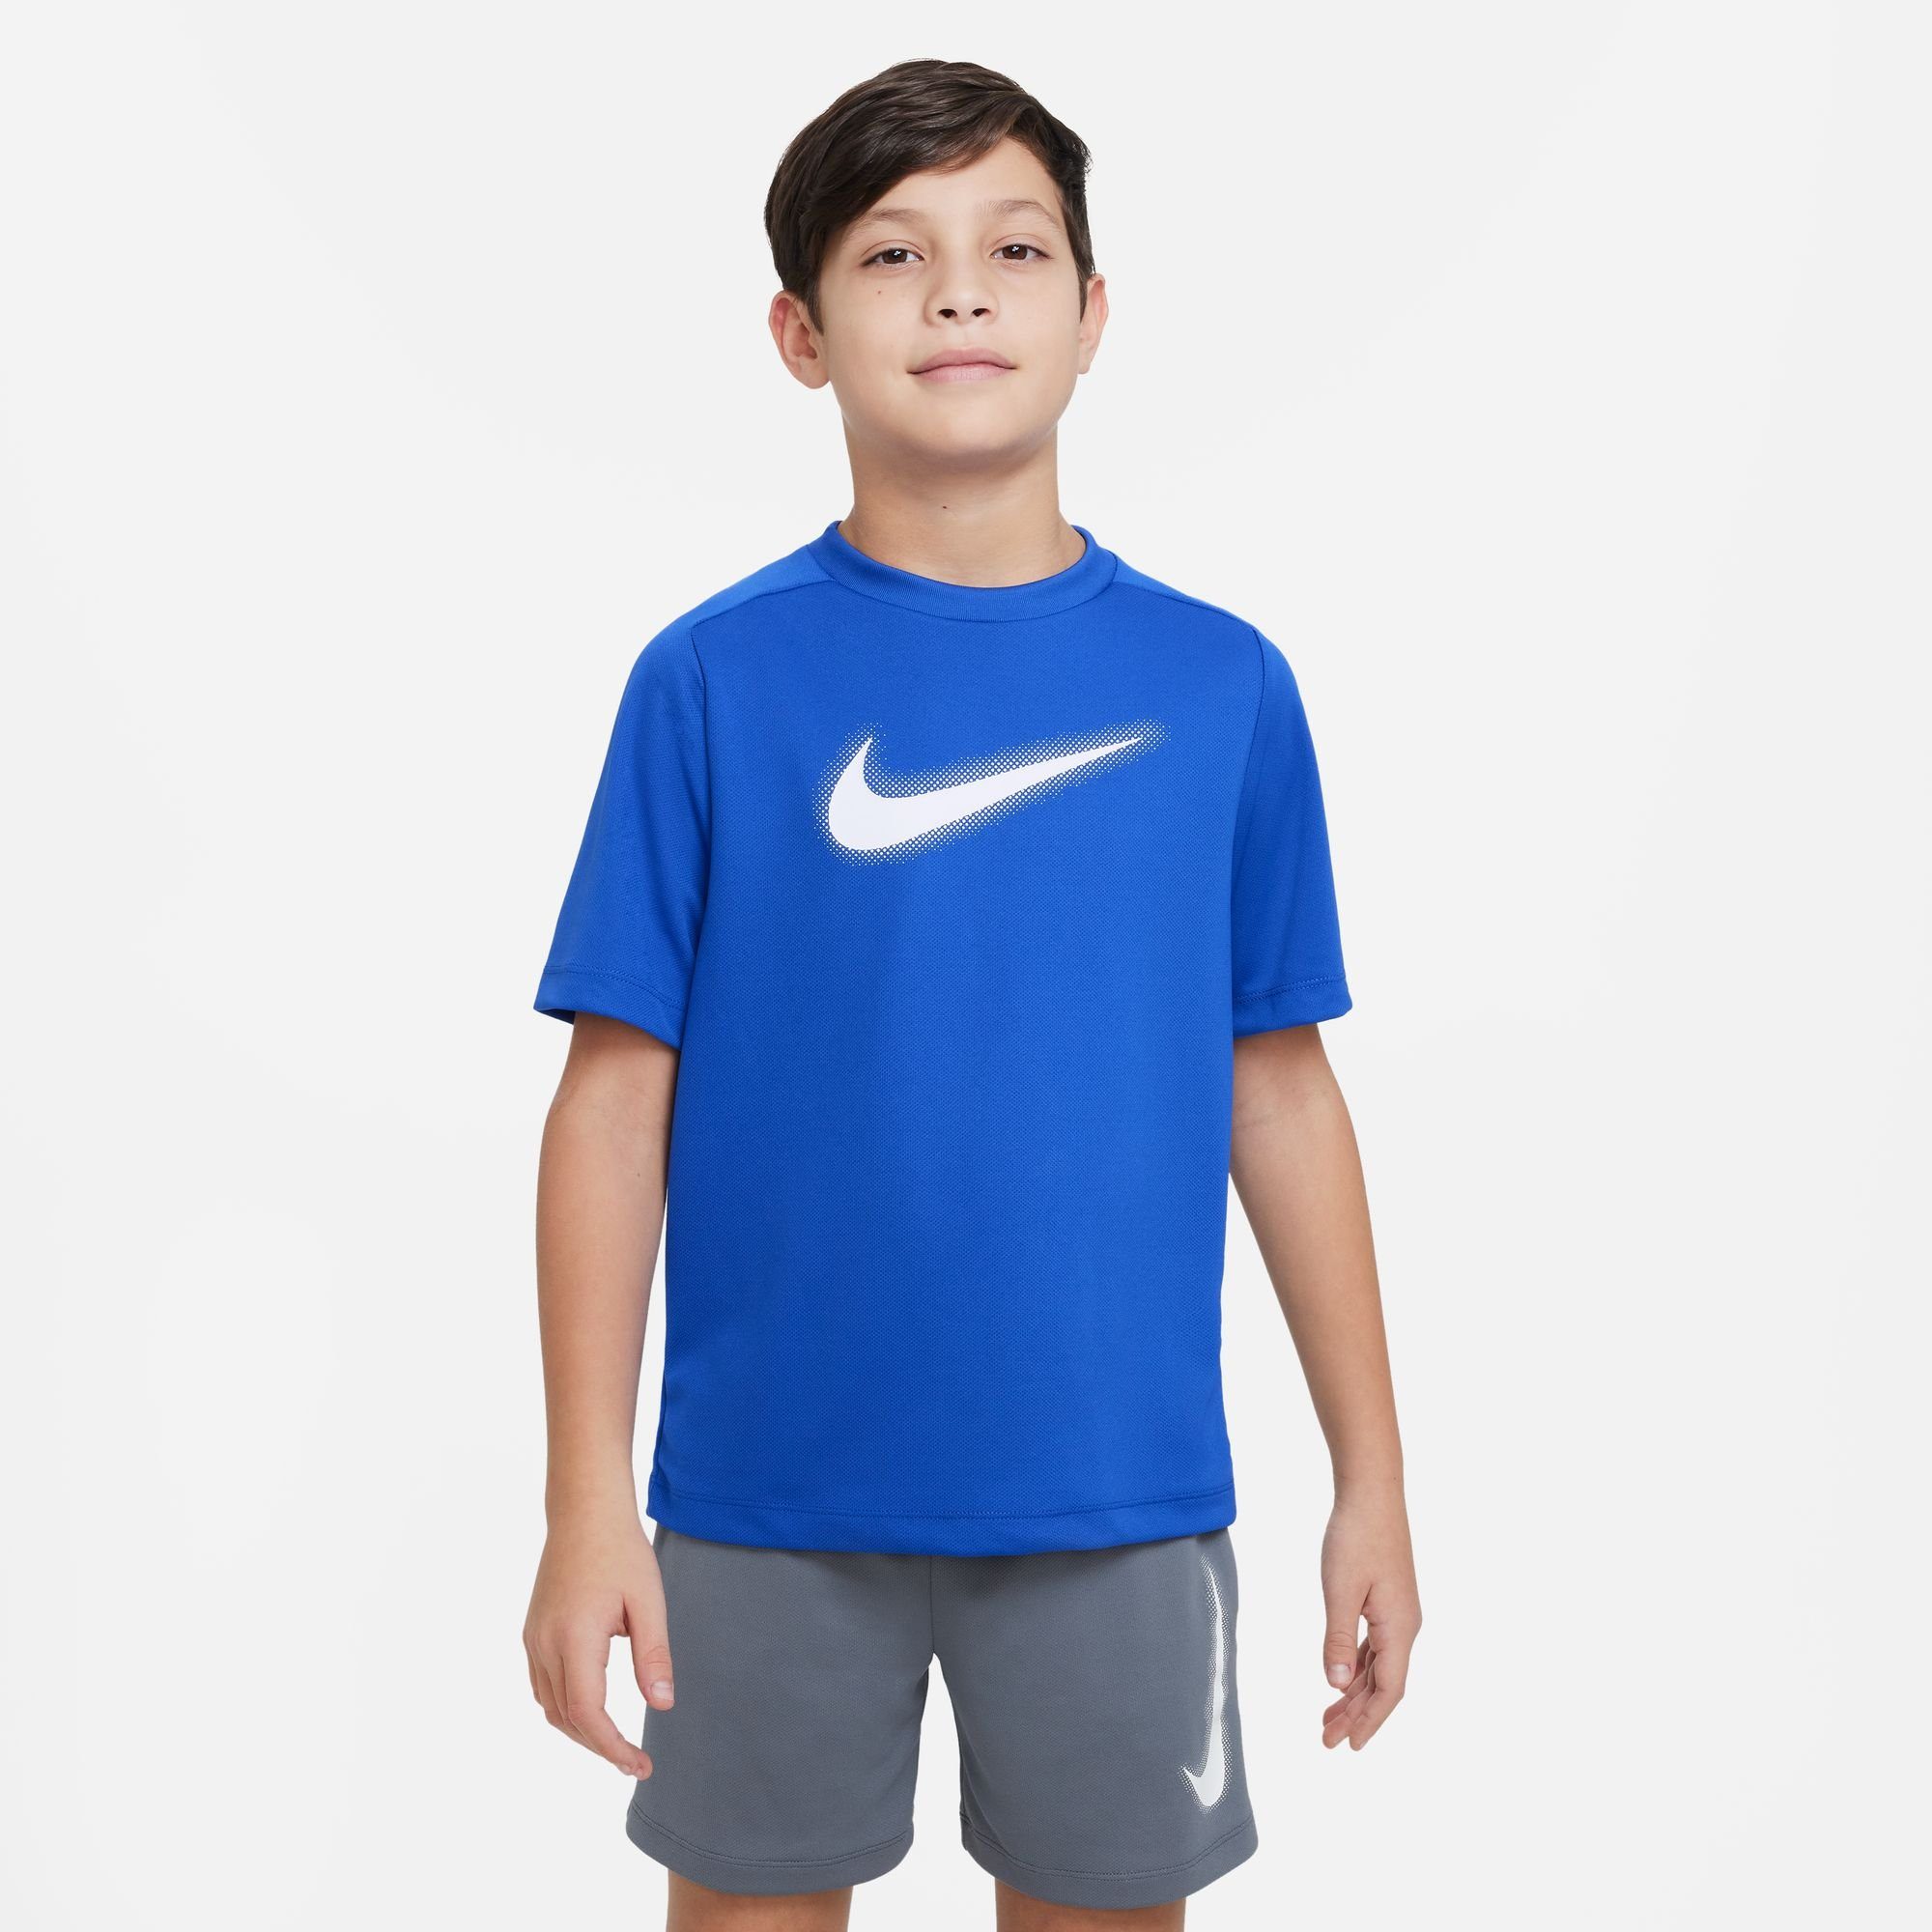 MULTI+ GAME (BOYS) Nike TRAINING Trainingsshirt DRI-FIT GRAPHIC BIG ROYAL/WHITE KIDS' TOP